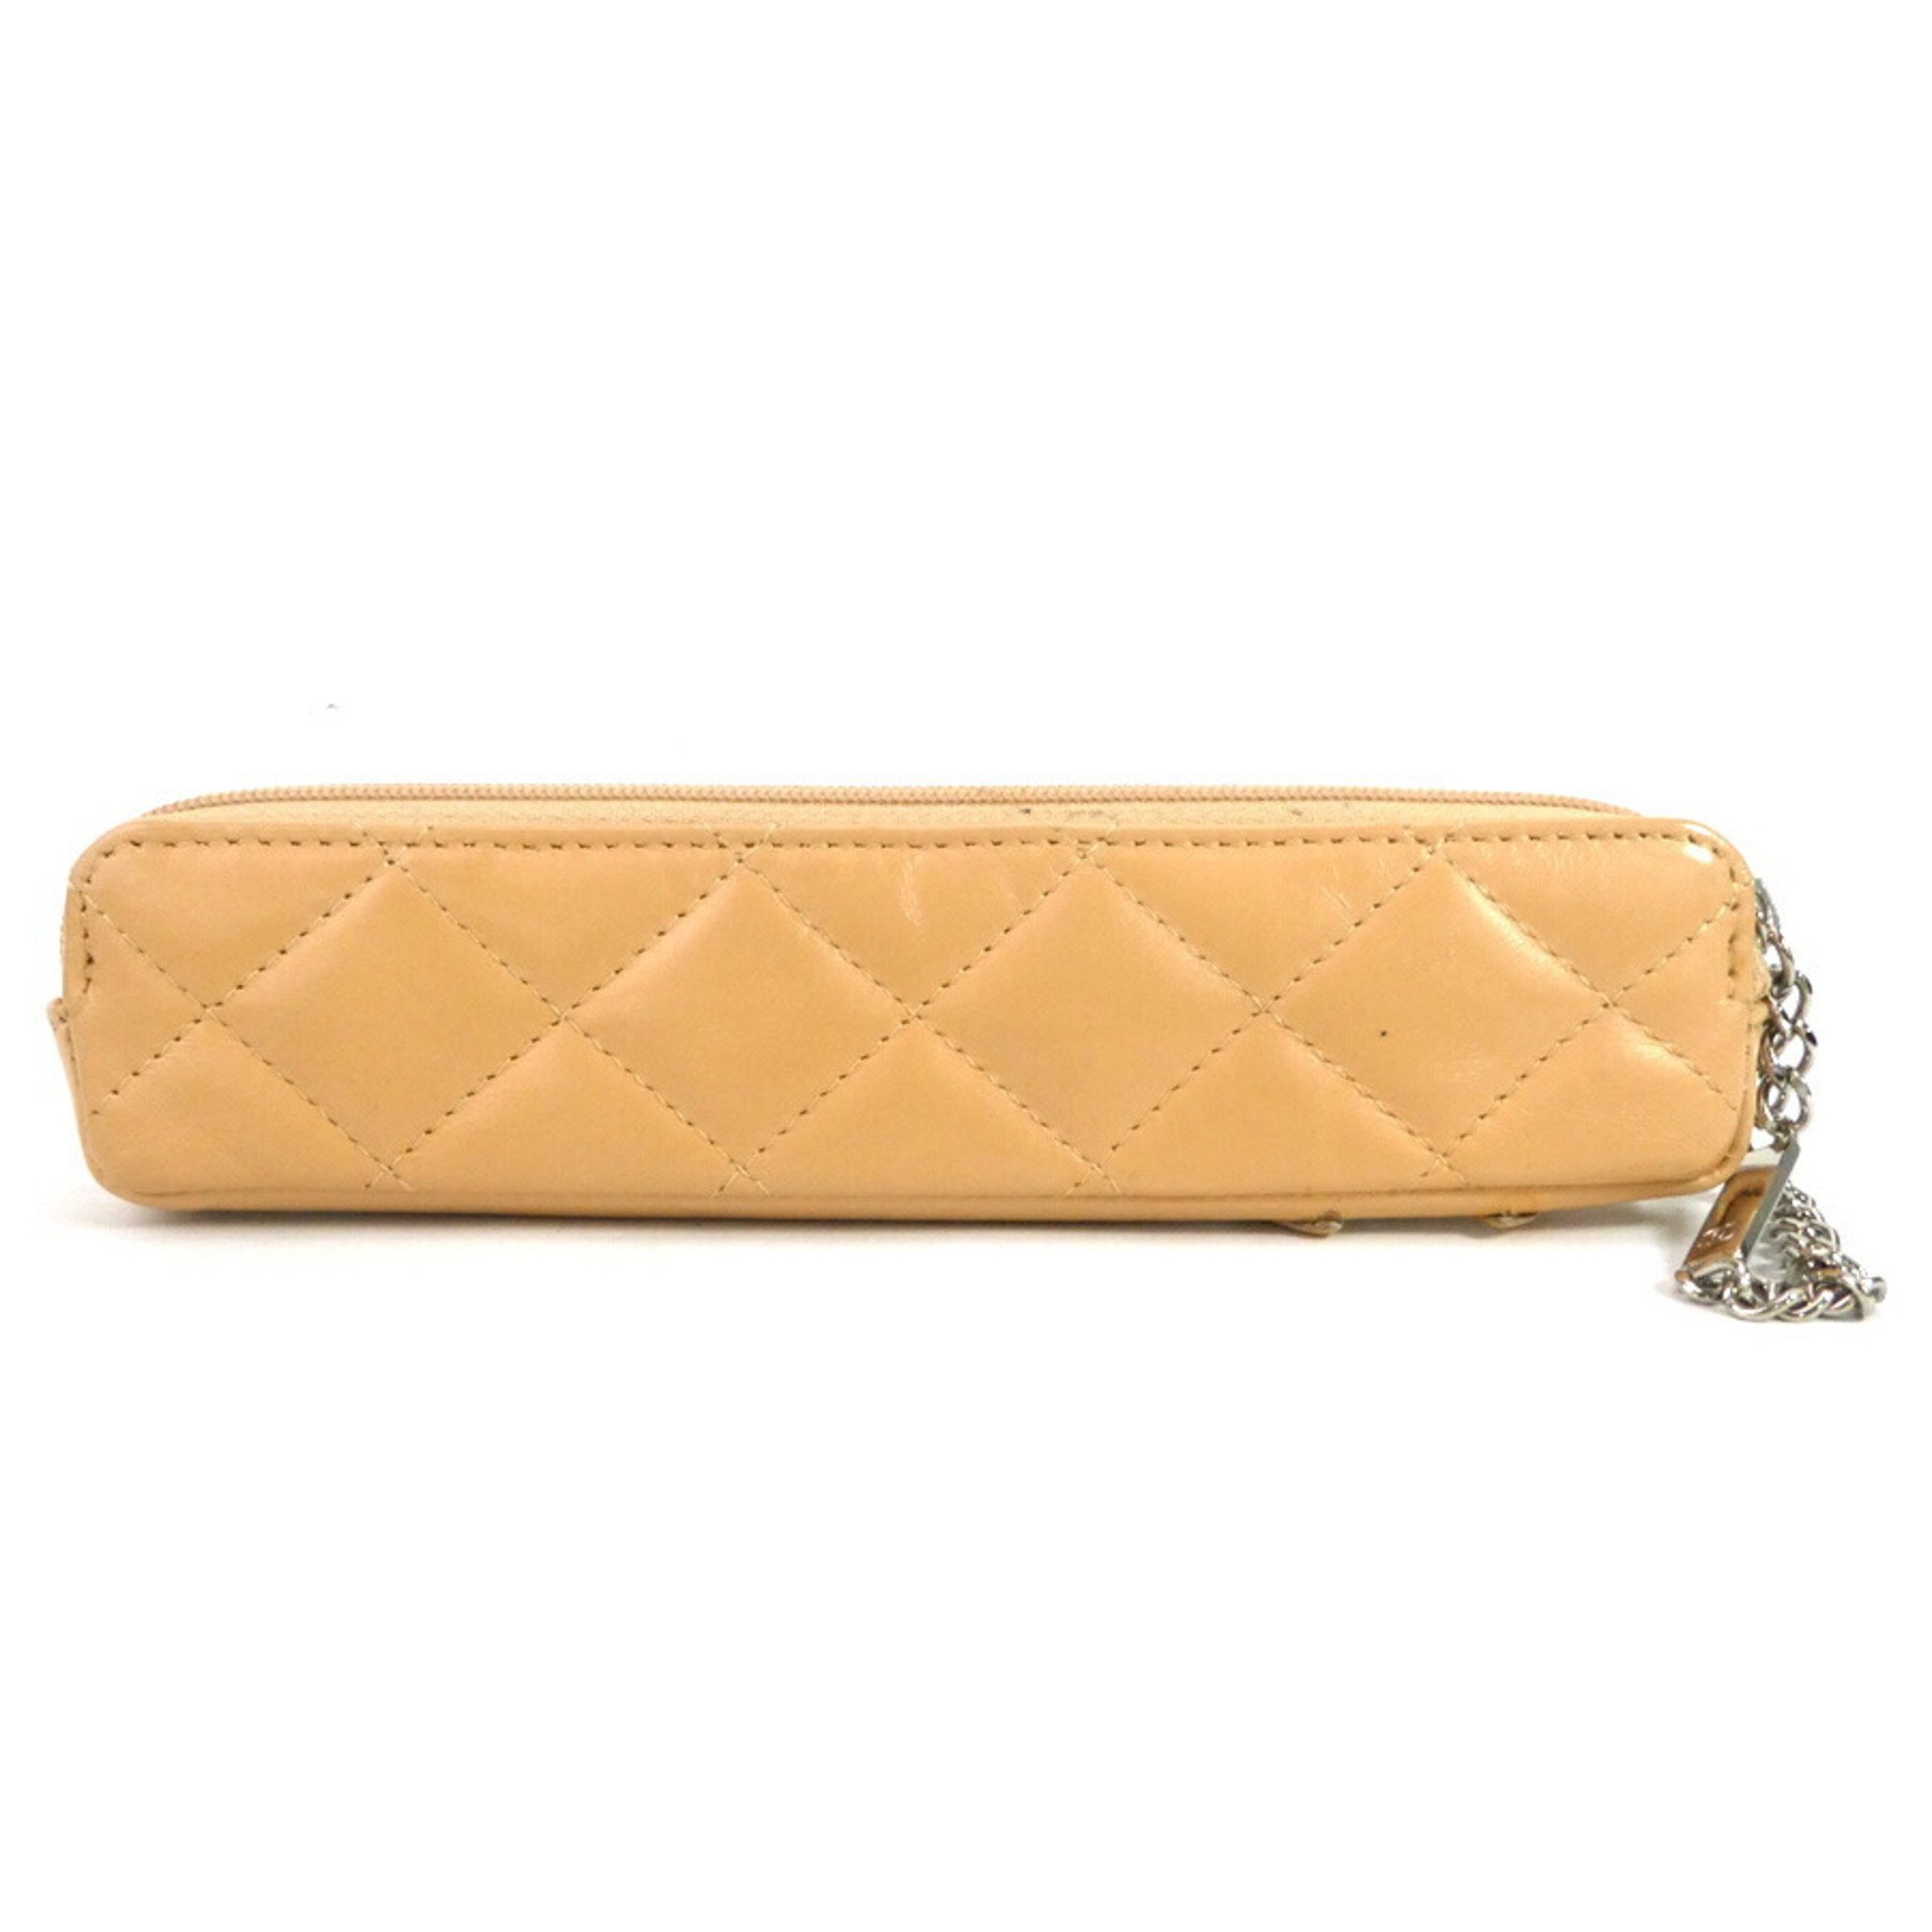 Chanel CHANEL Pen Case Cambon Line Leather/Patent Leather Beige Silver Women's e55914f